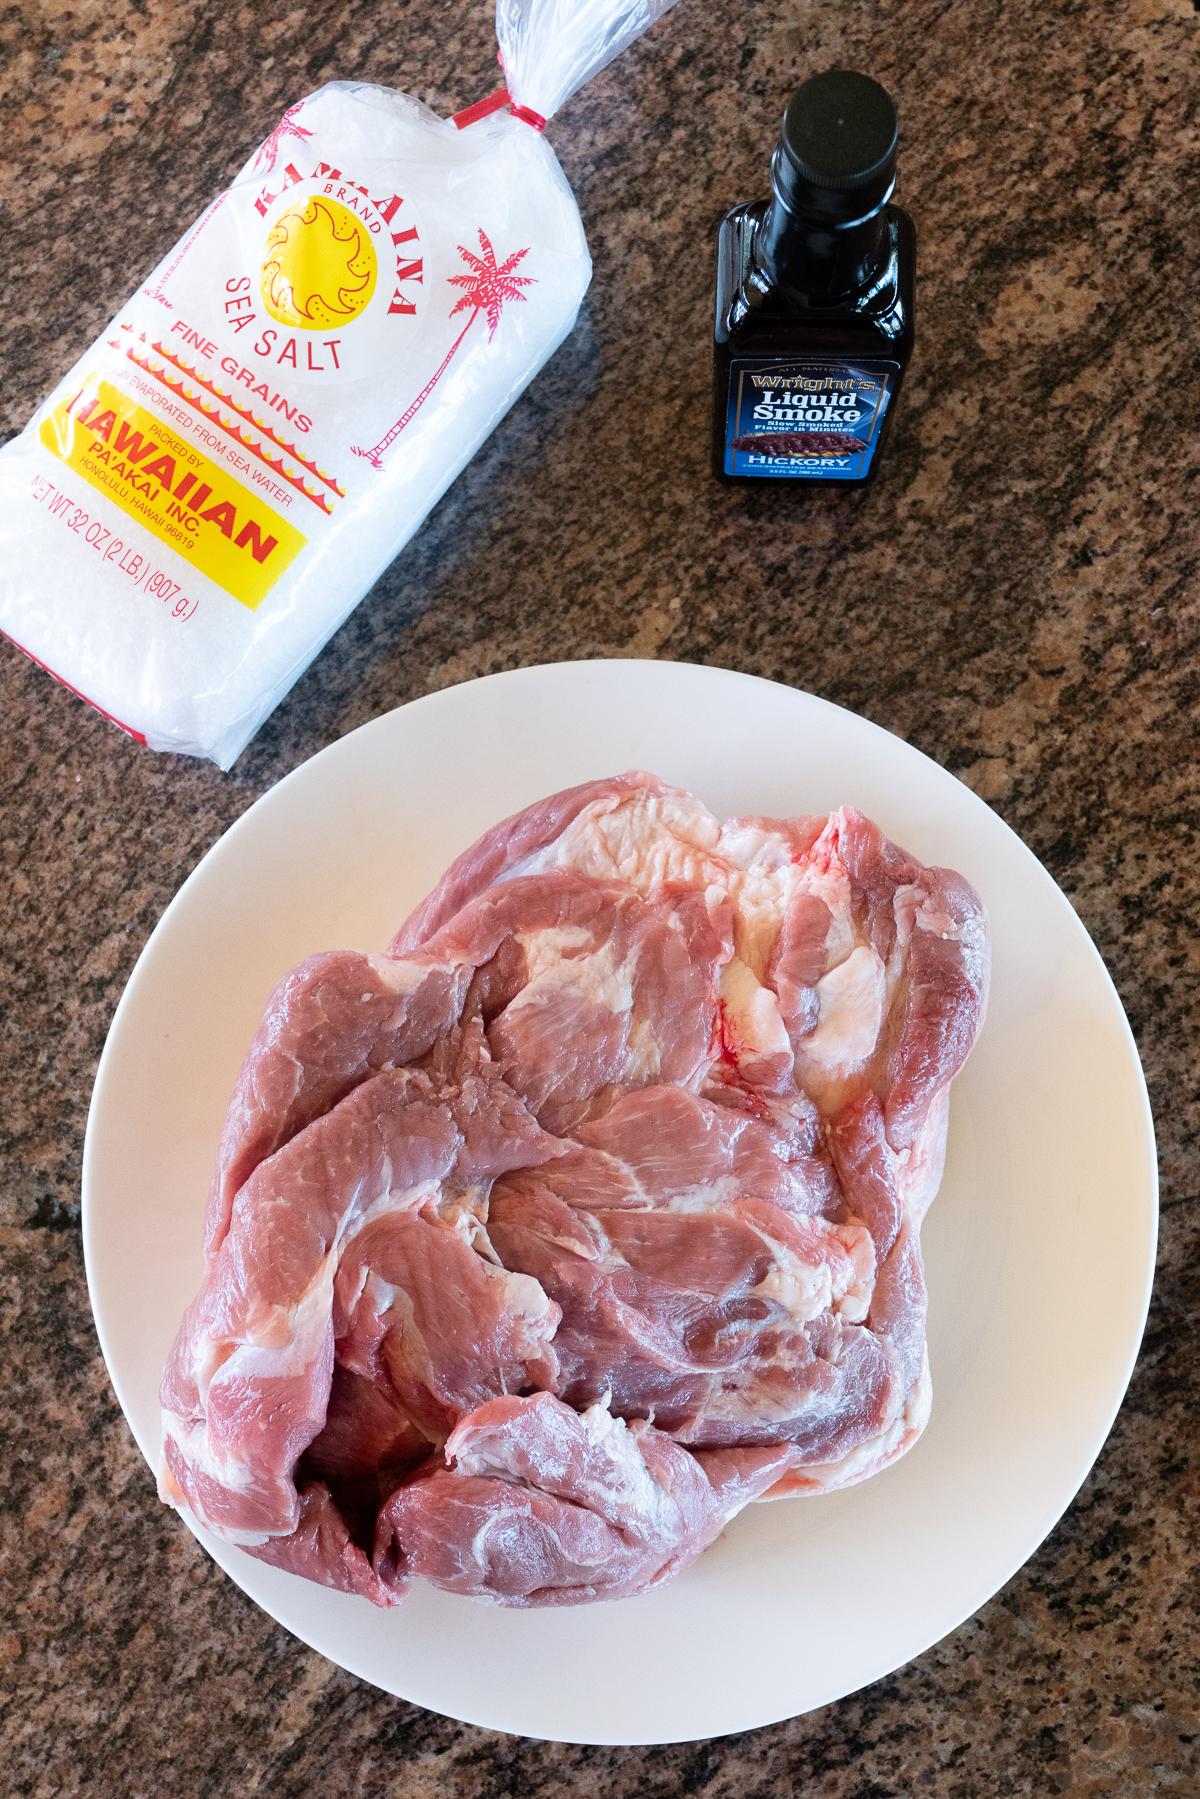 Three ingredients to make Kalua Pork: boneless pork butt, sea salt, and liquid smoke.